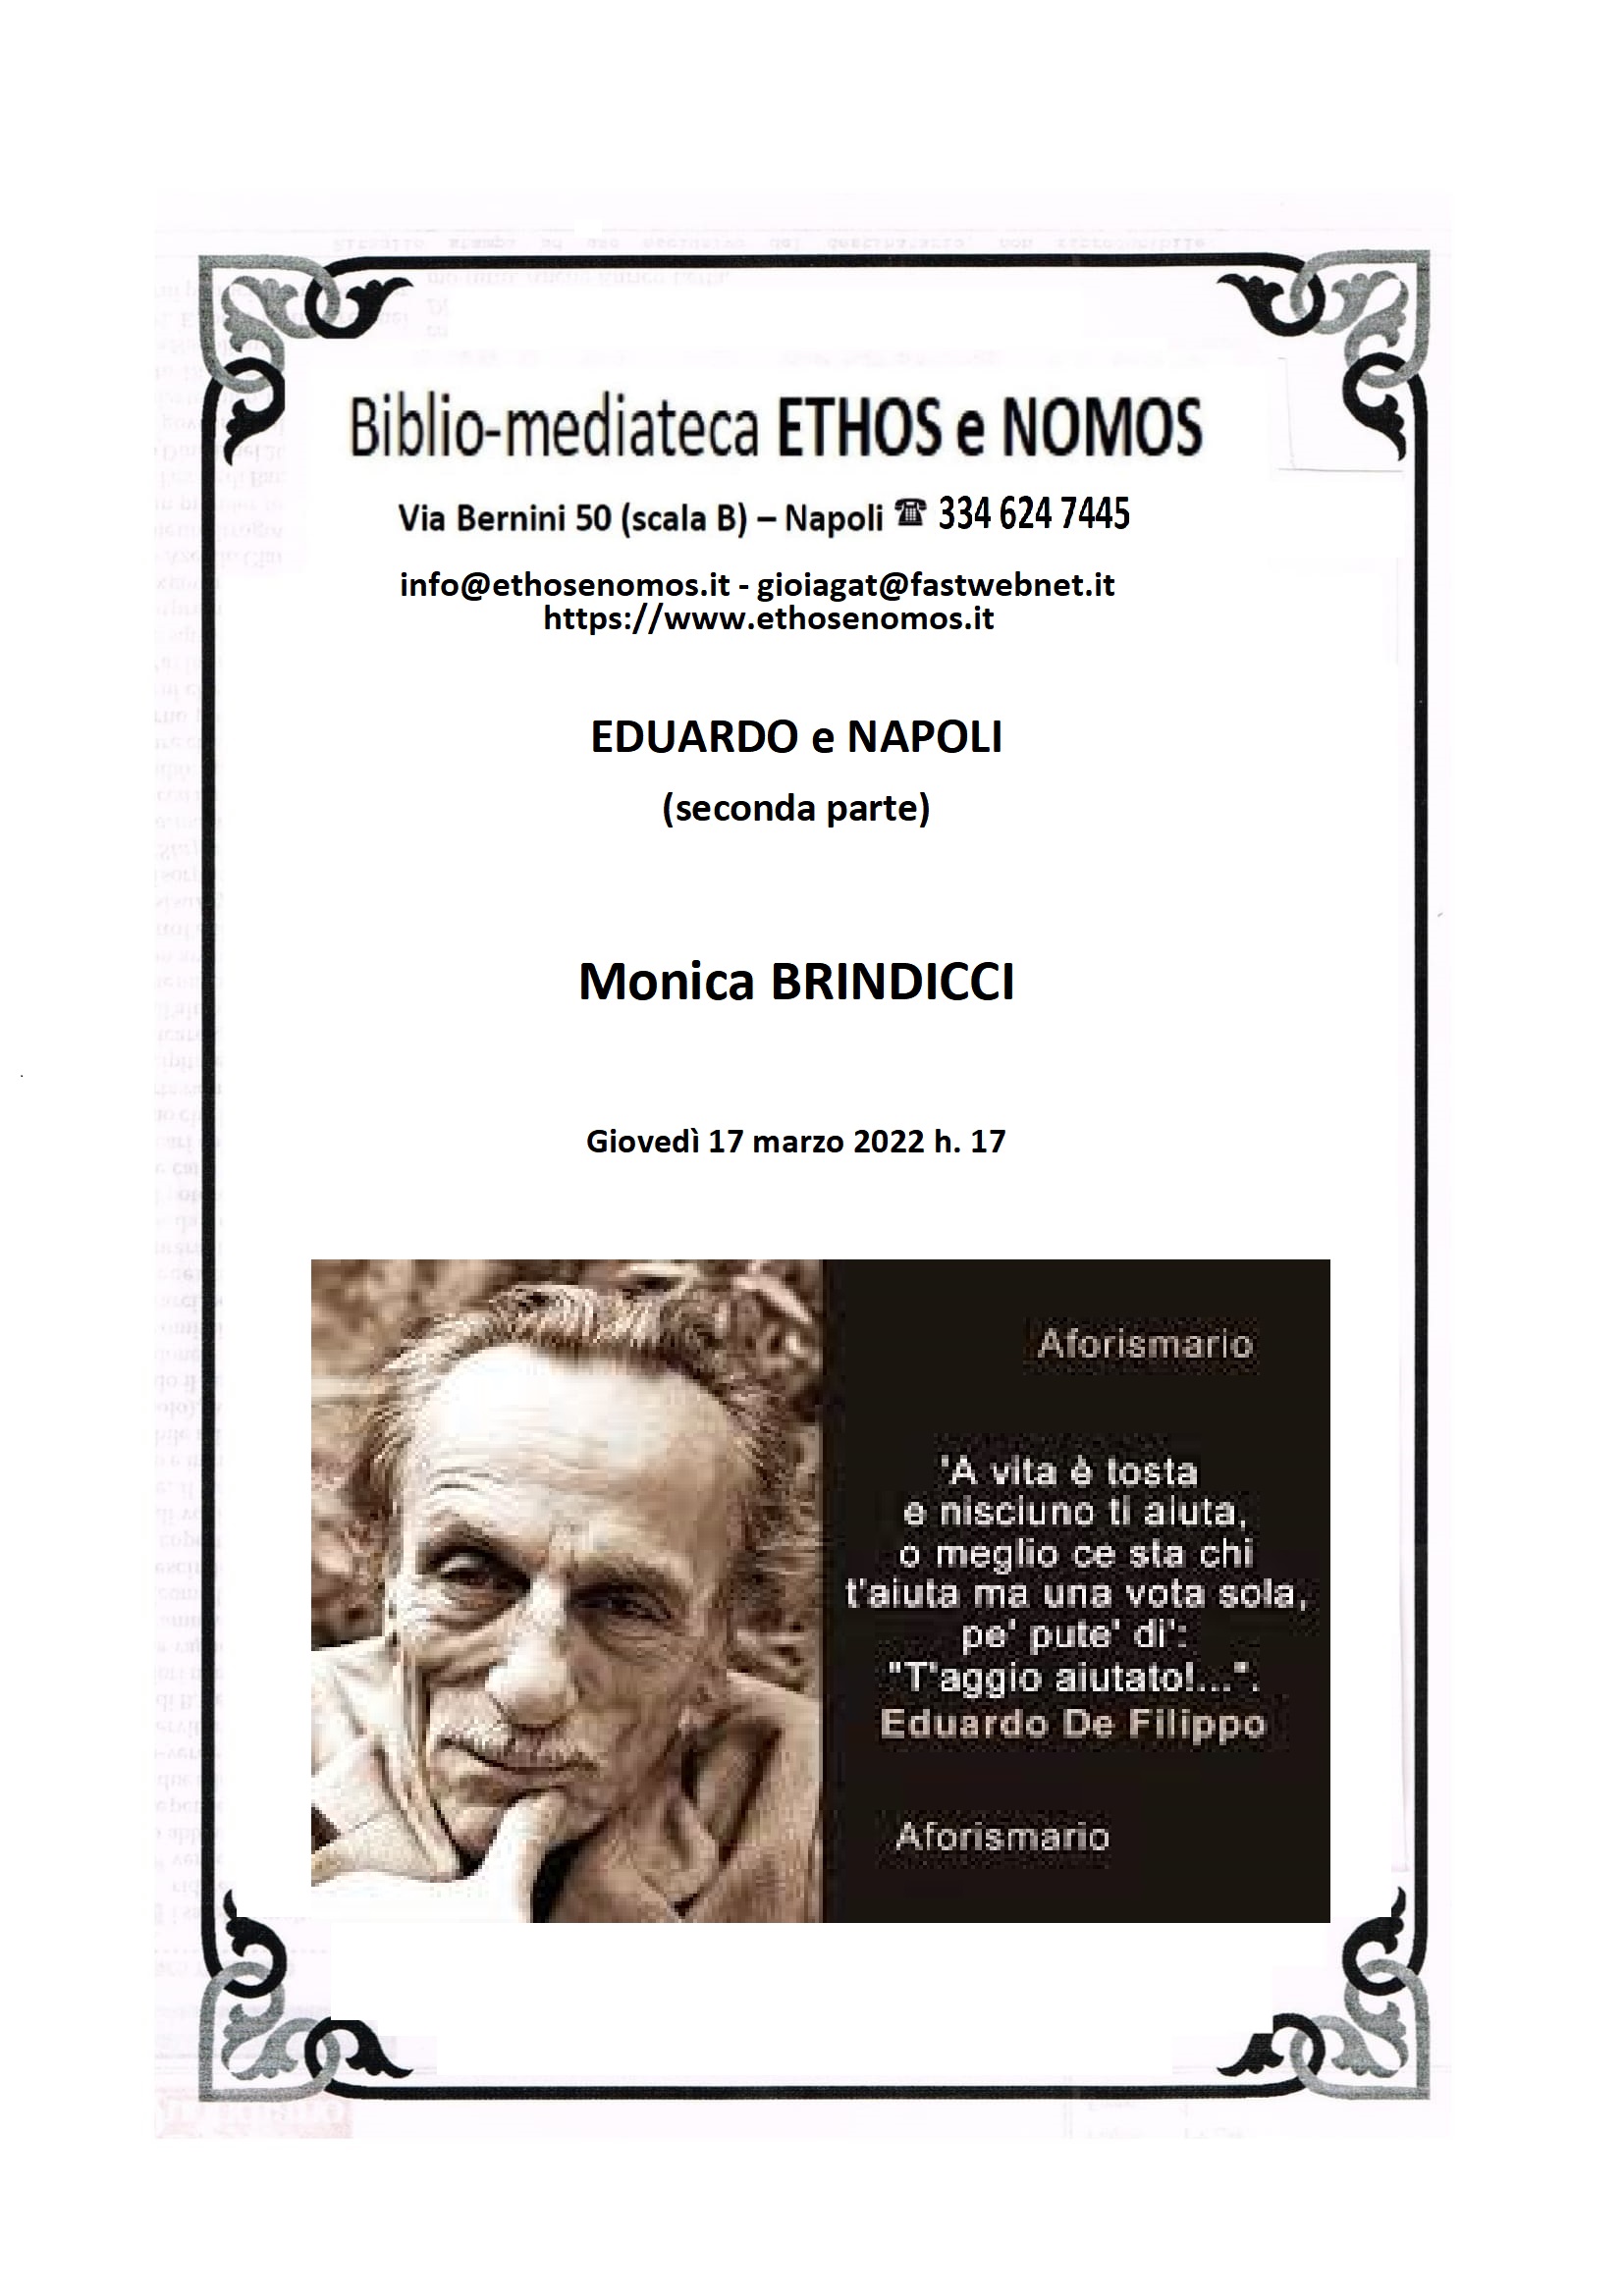 MONICA BRINDICCI - EDUARDO E NAPOLI (SECONDA PARTE)